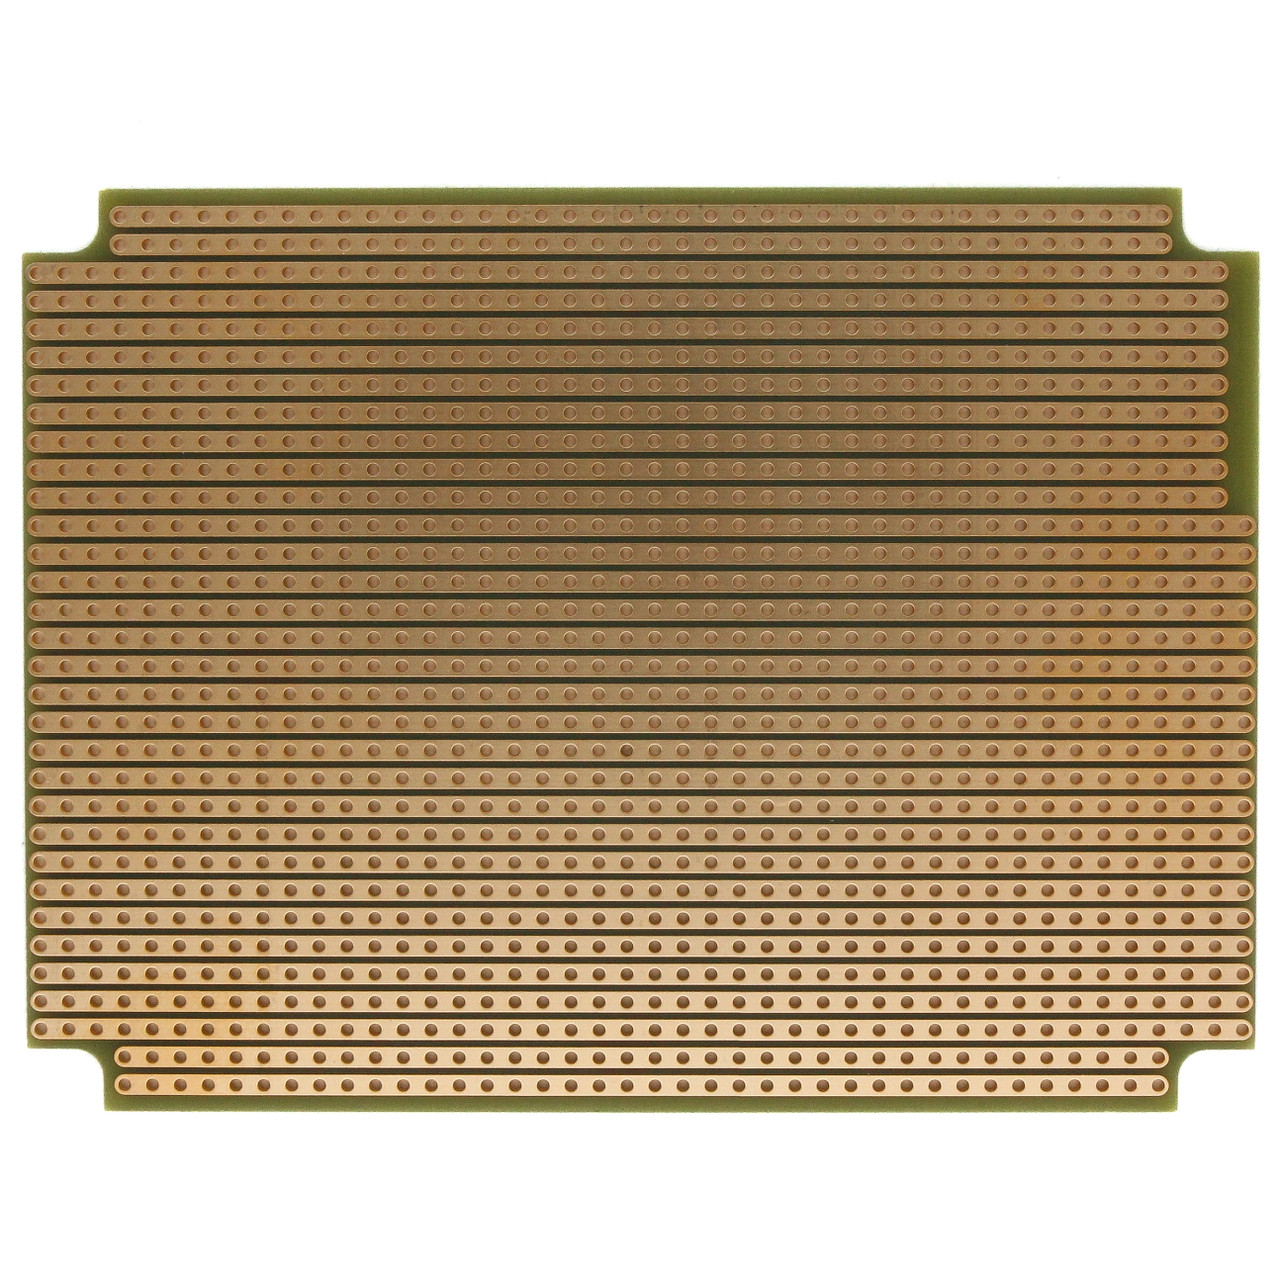 Strip Board - 44x32 Holes